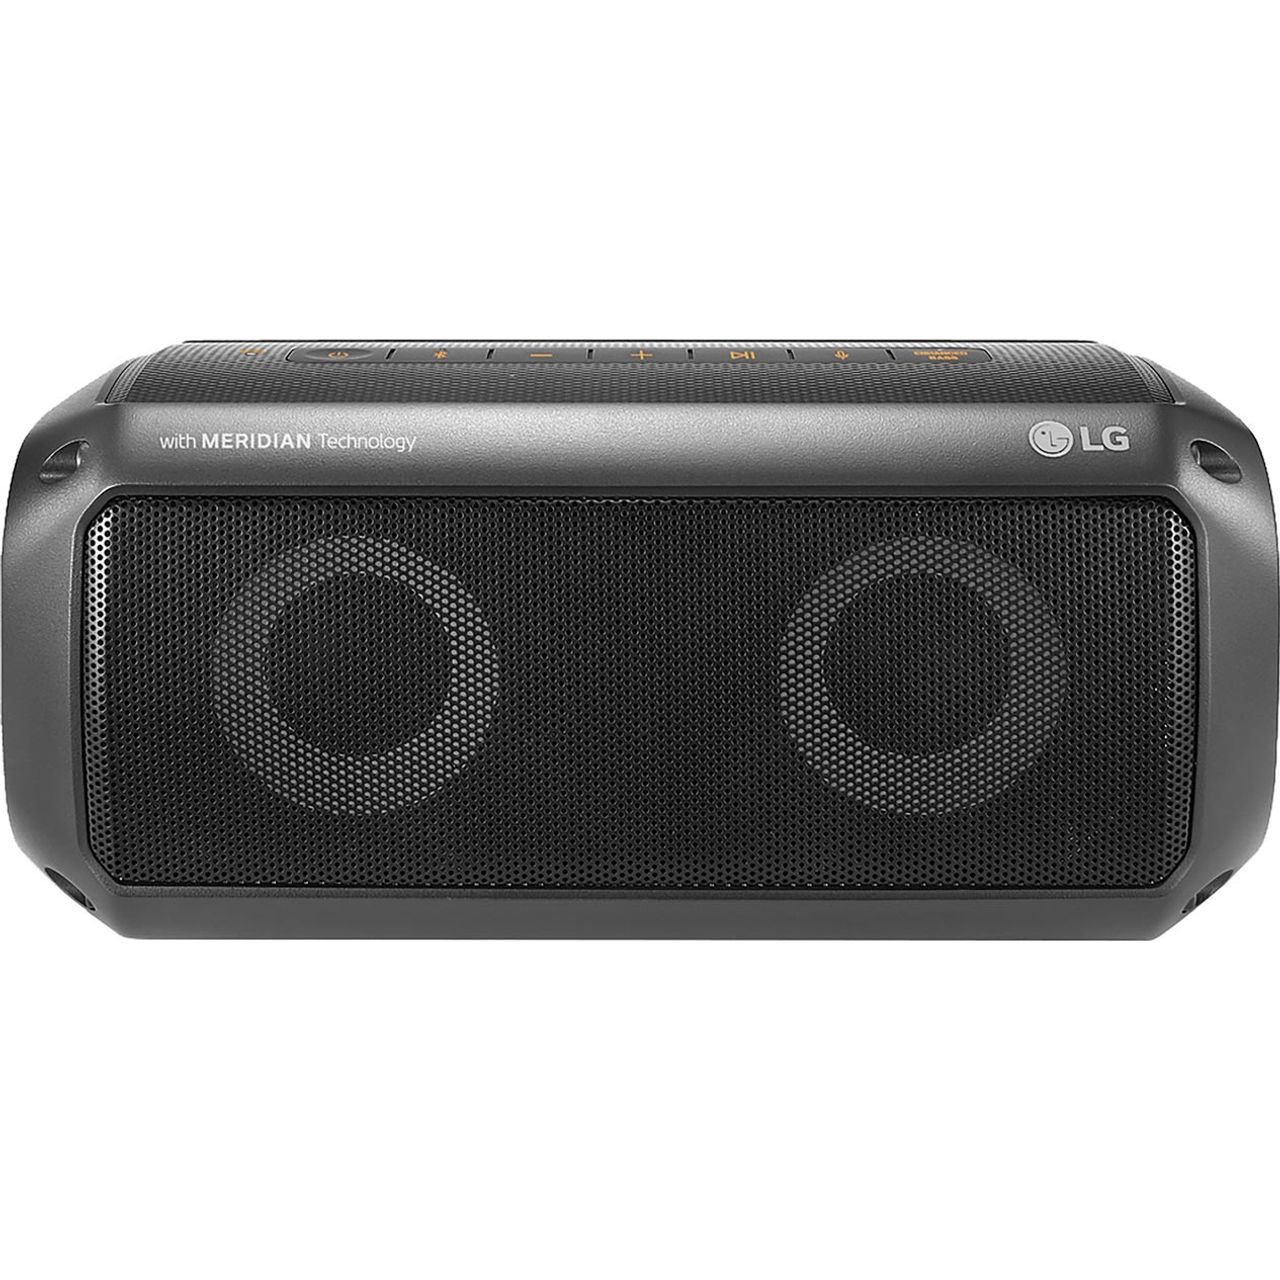 LG PK3 XBOOM GO Portable Wireless Speaker Review